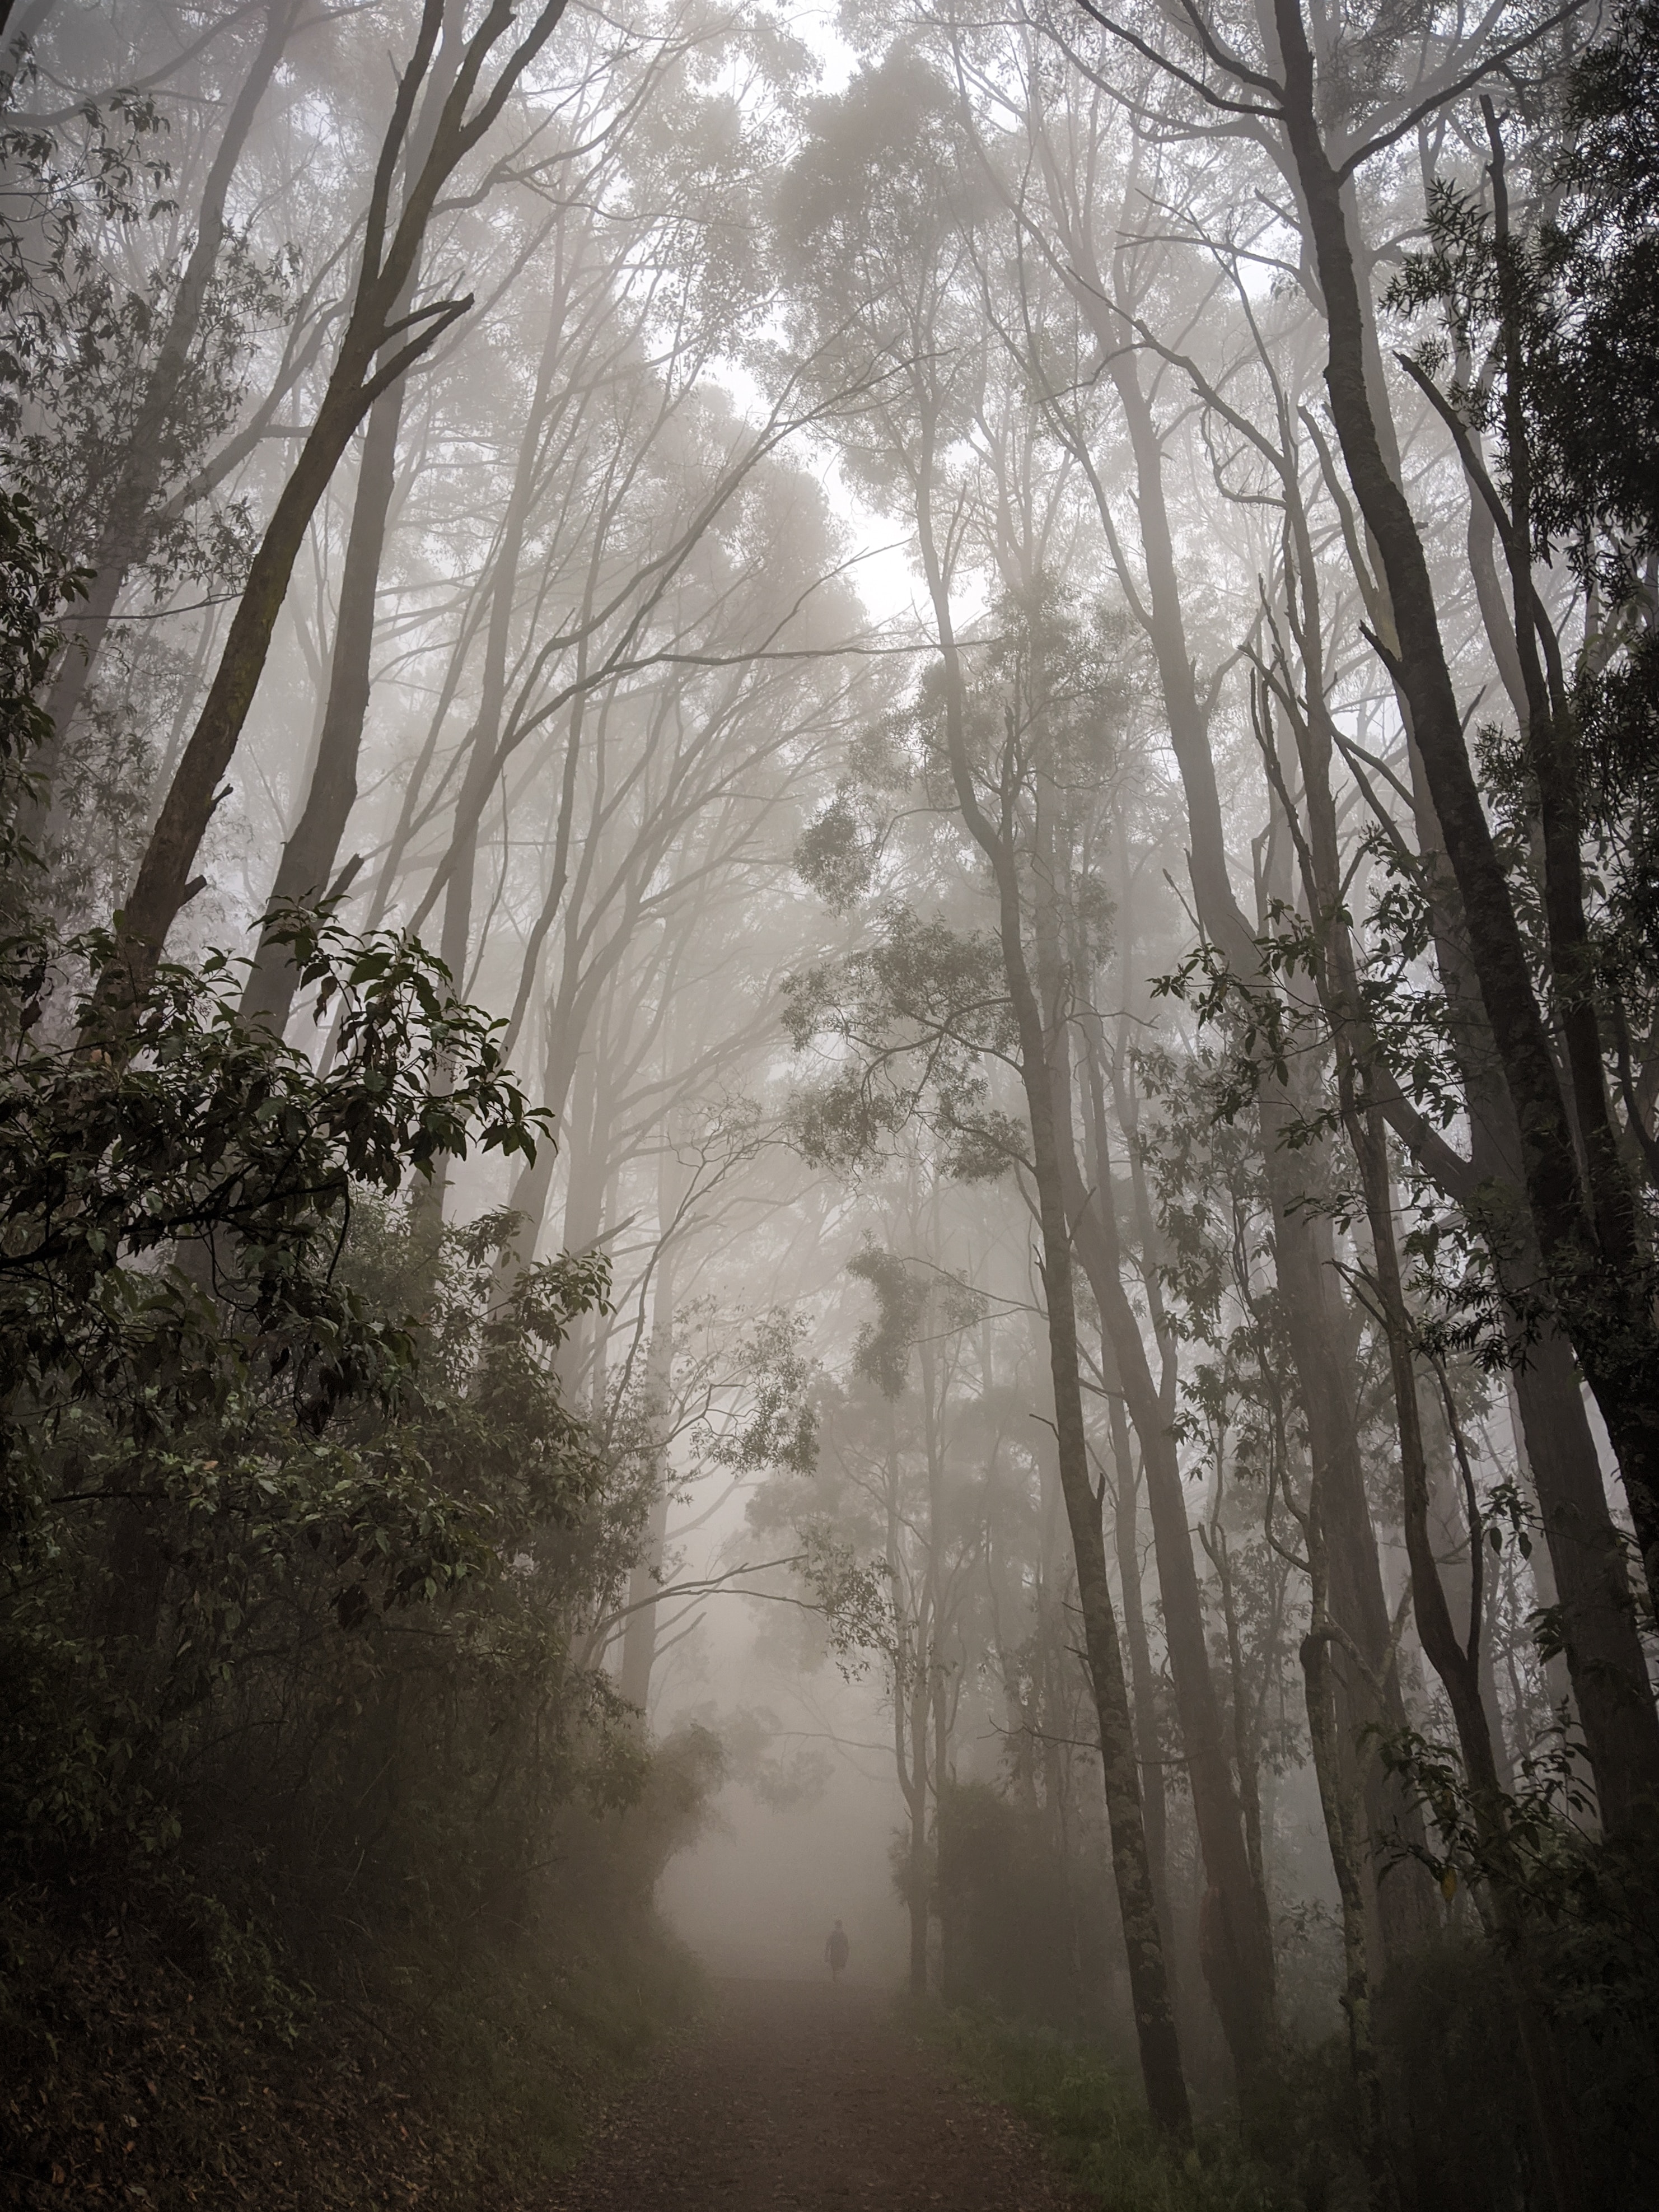 124406 descargar imagen naturaleza, árboles, camino, bosque, niebla, calina, neblina: fondos de pantalla y protectores de pantalla gratis